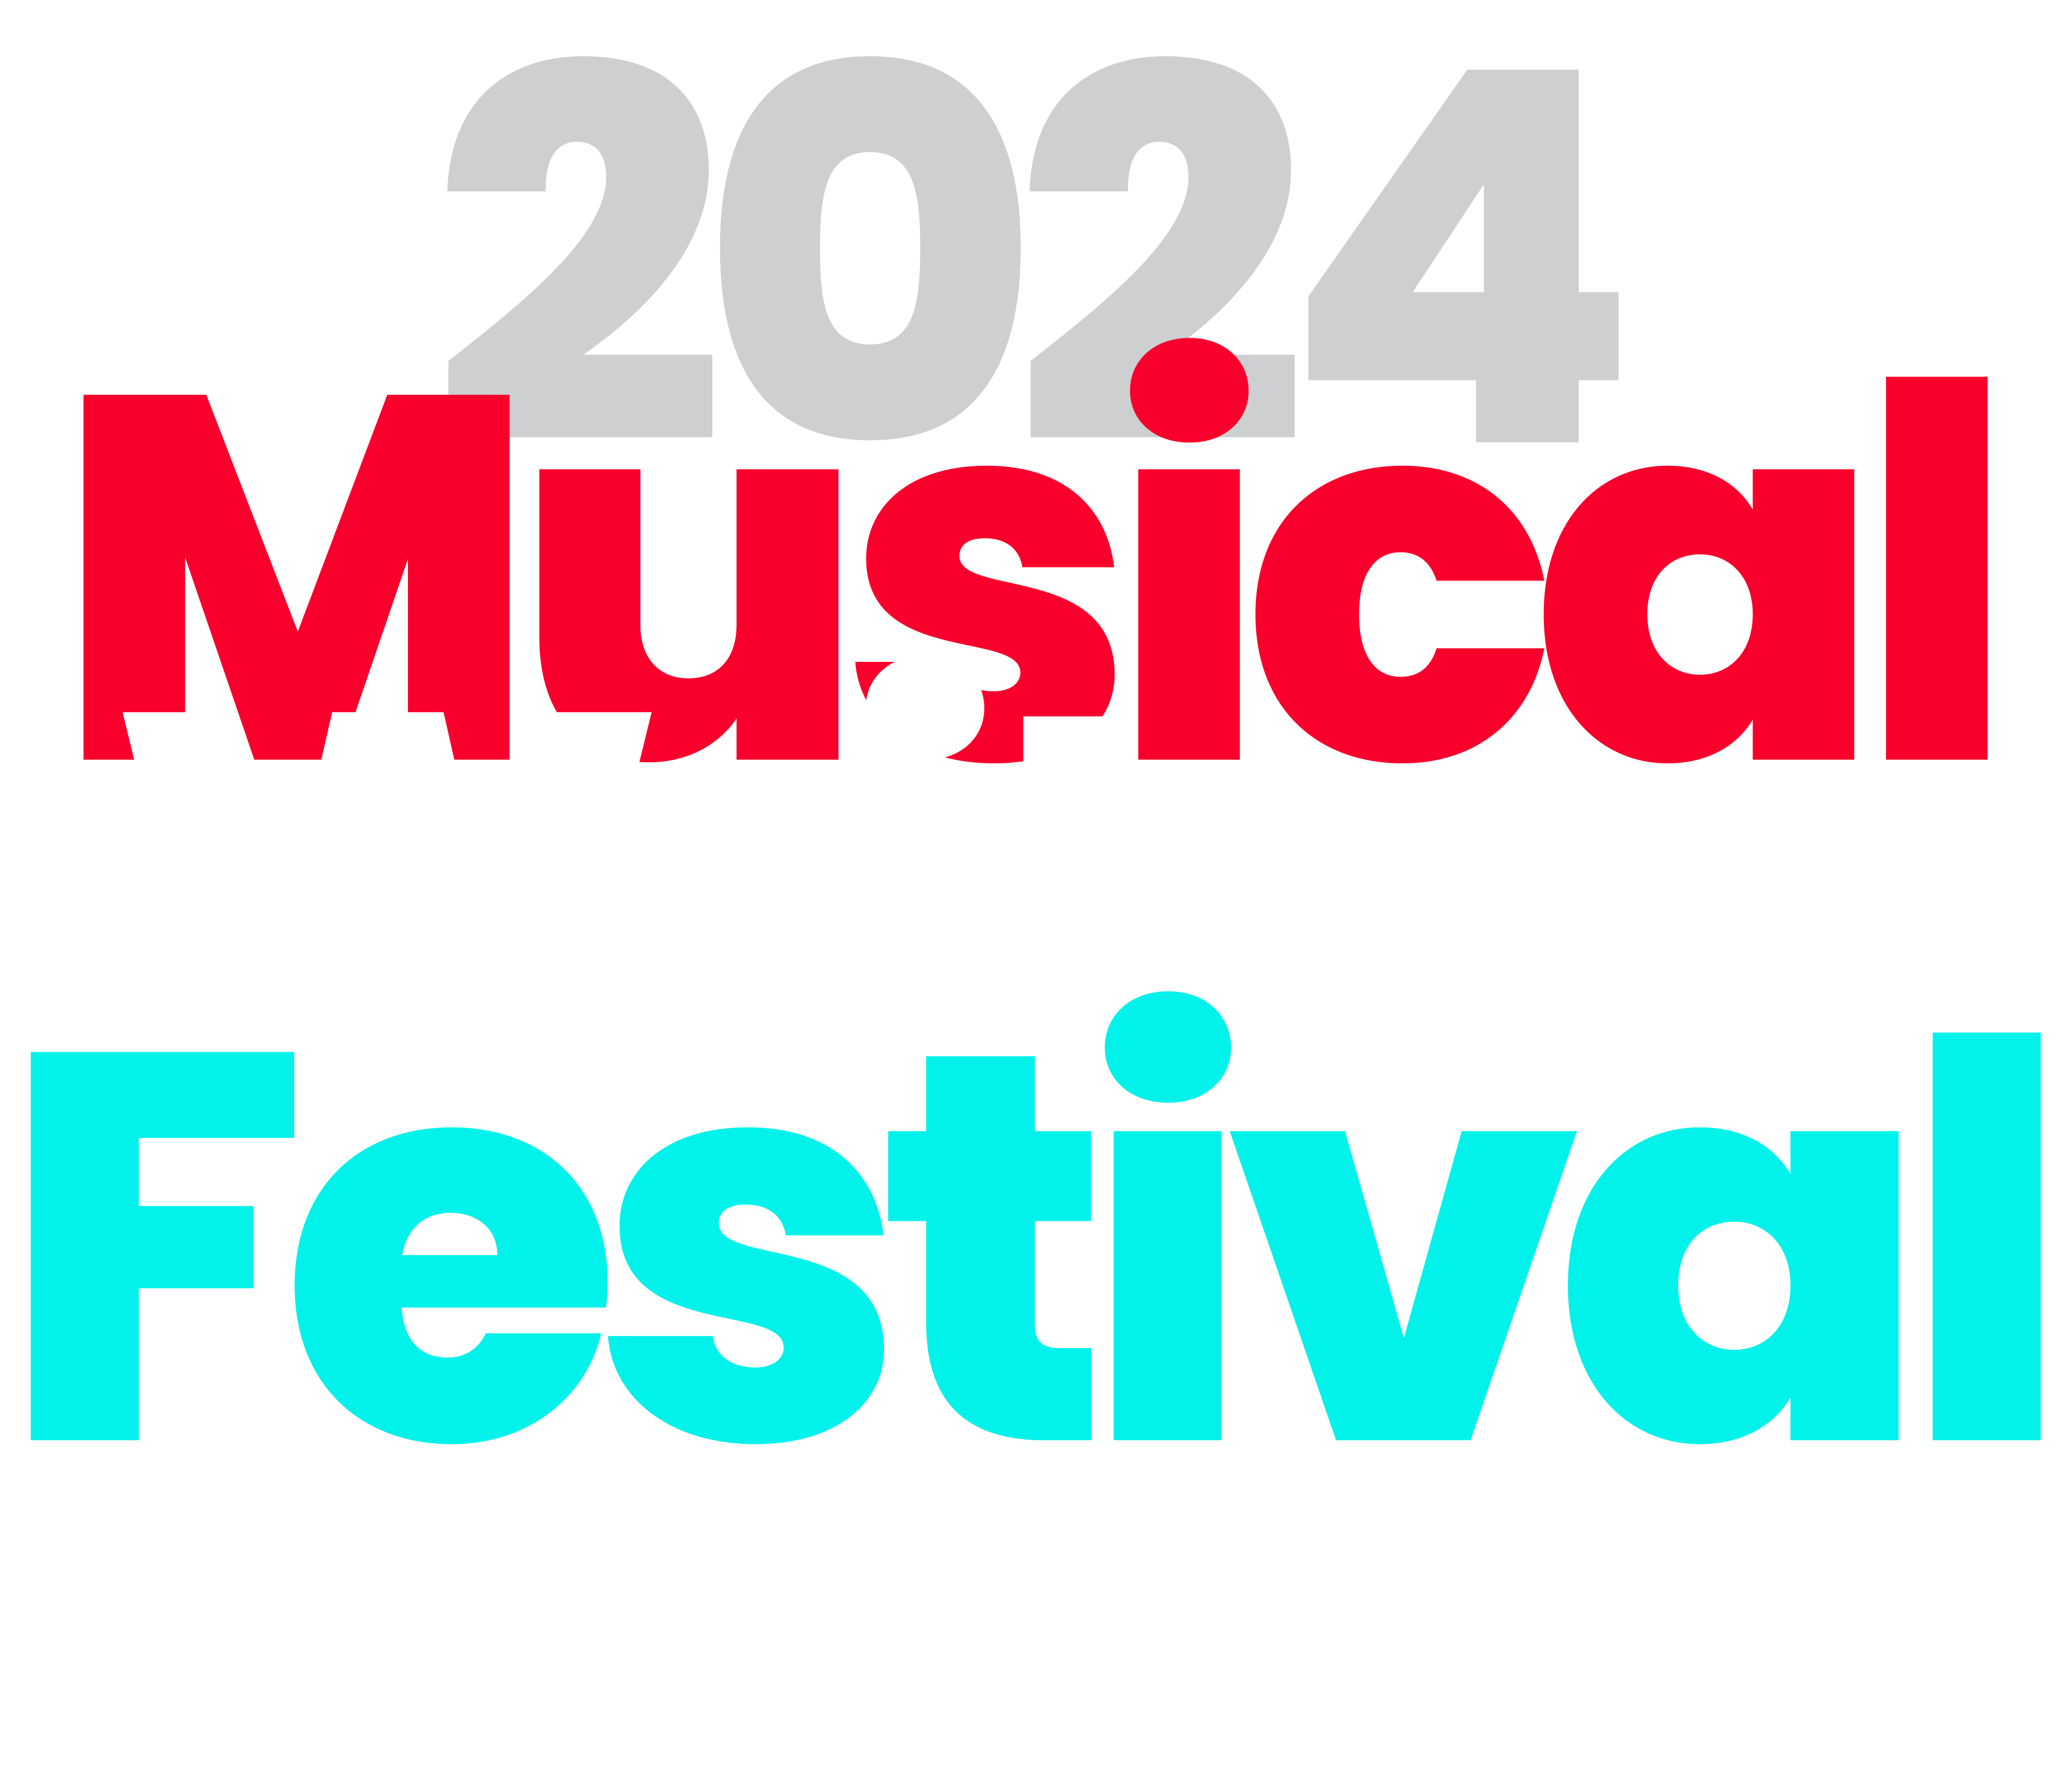 Musical Writers Festival